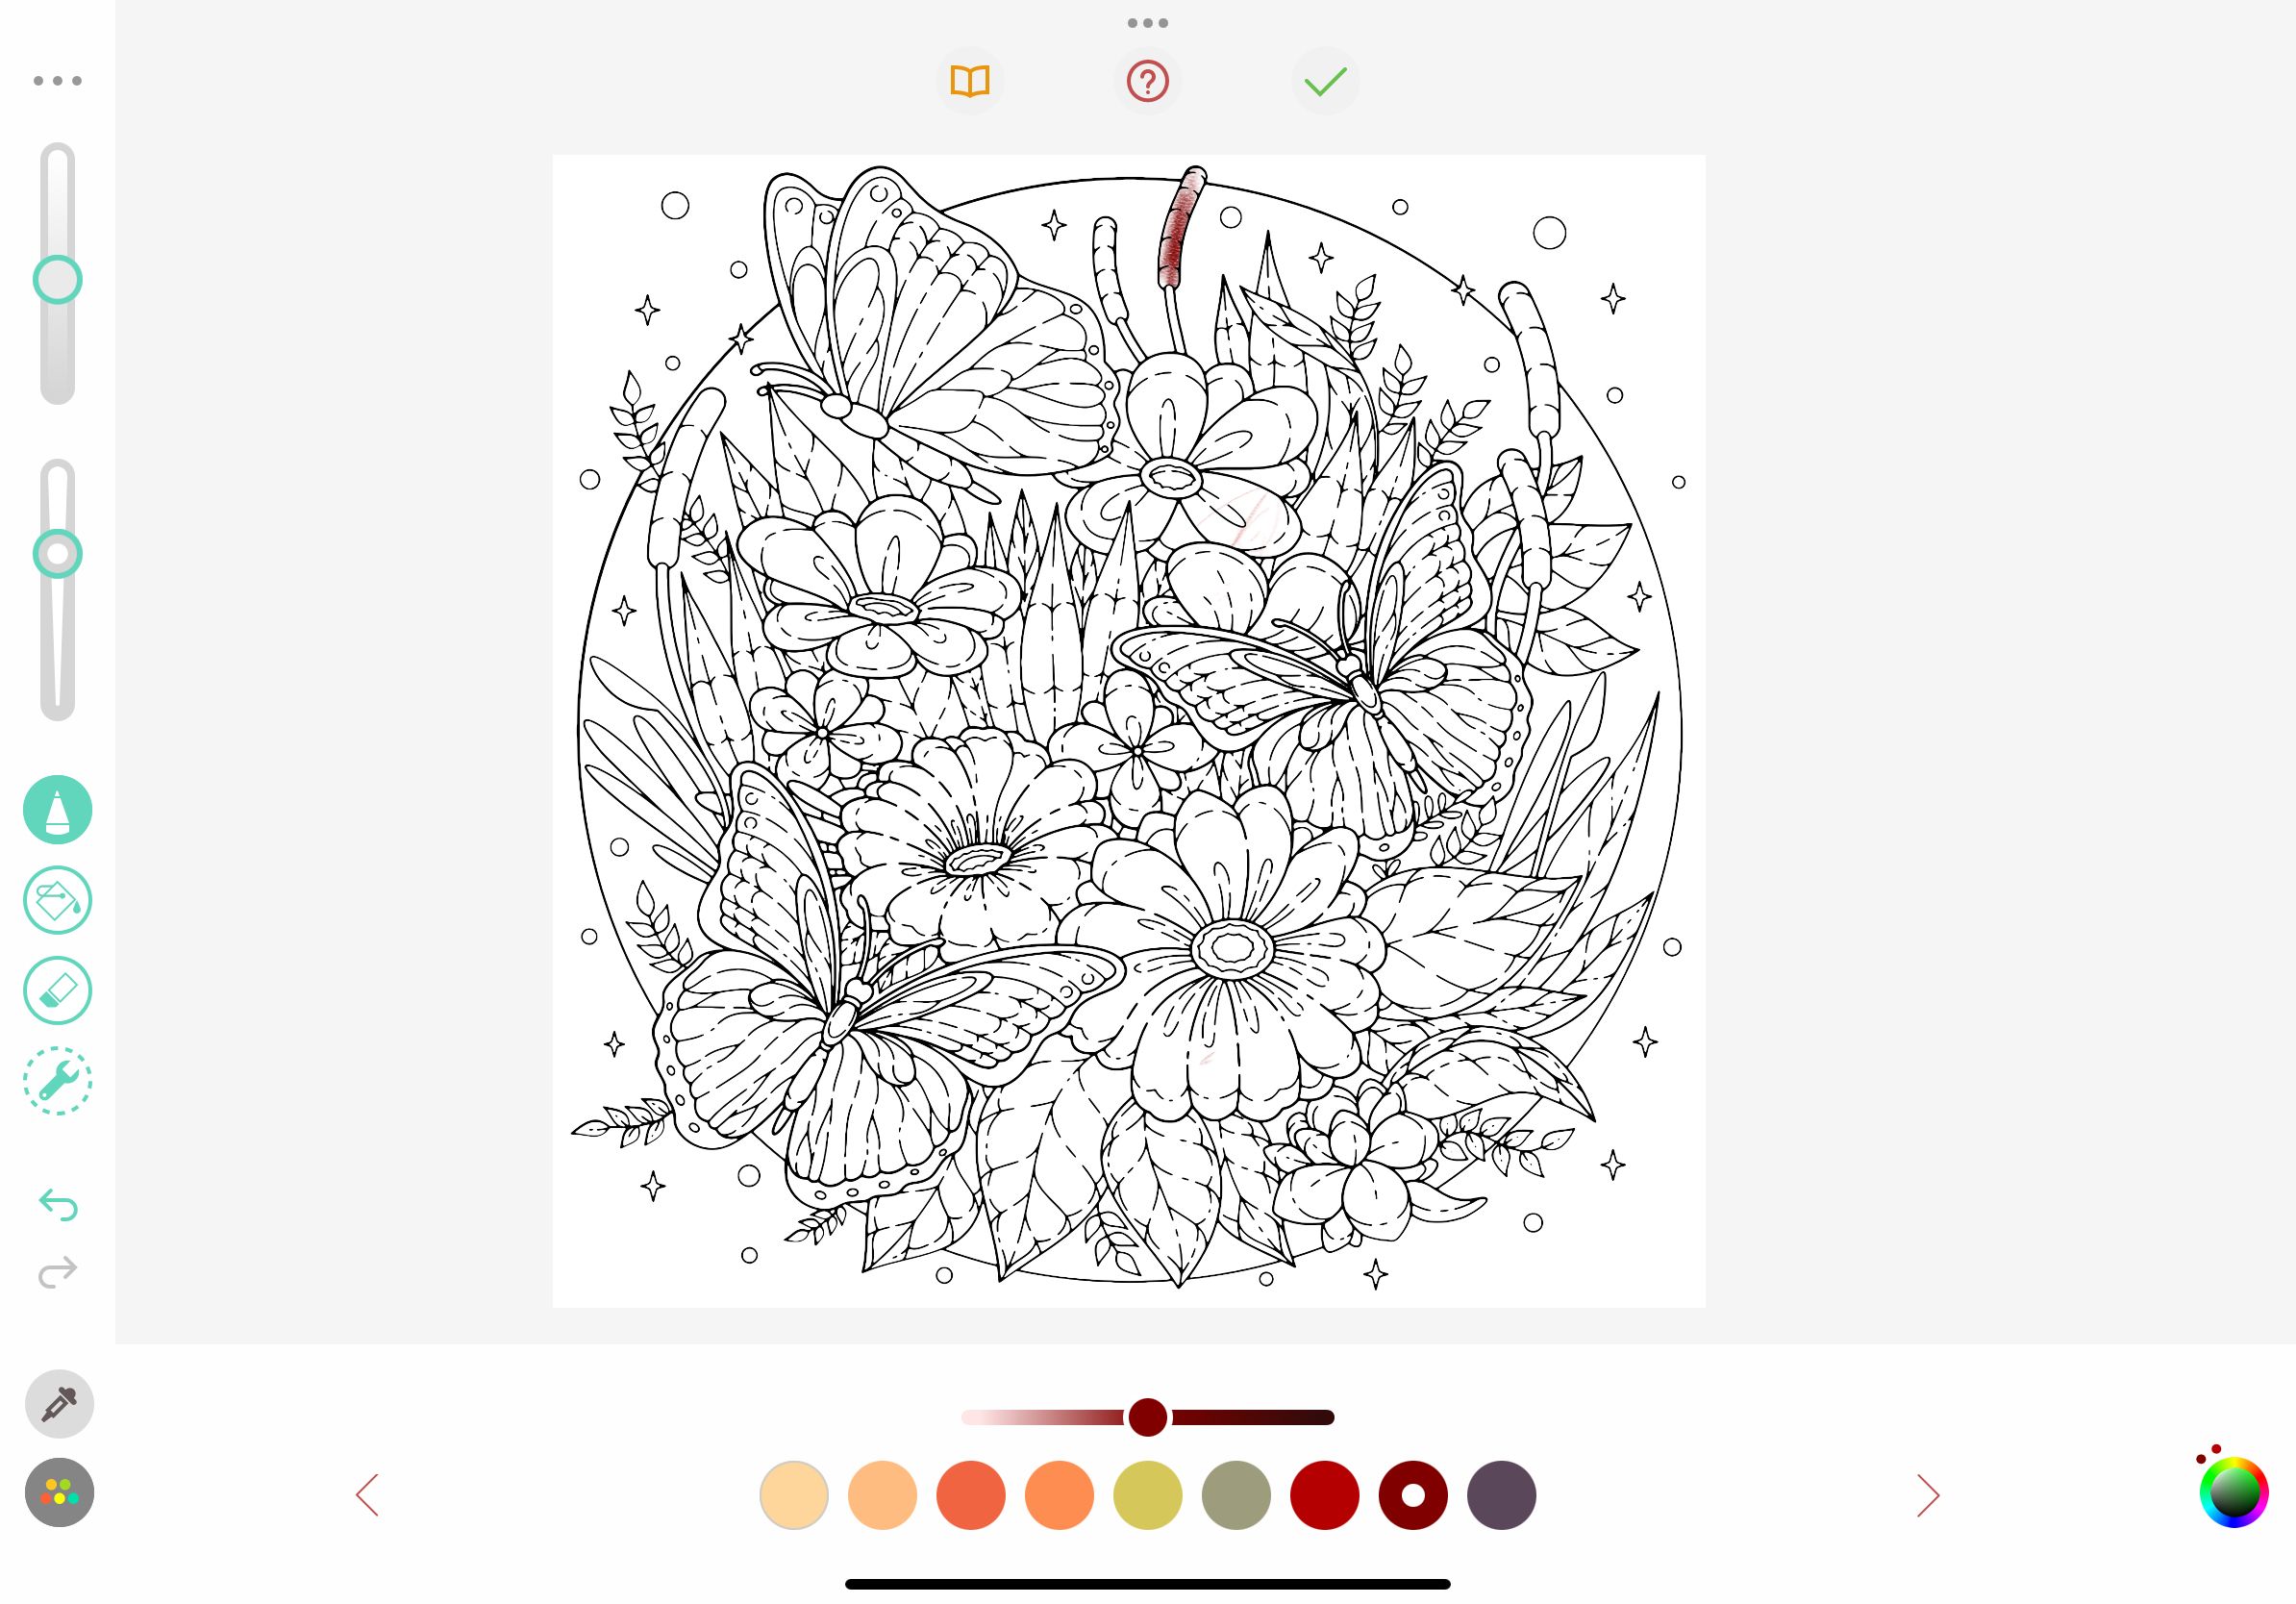 pigment app coloring page